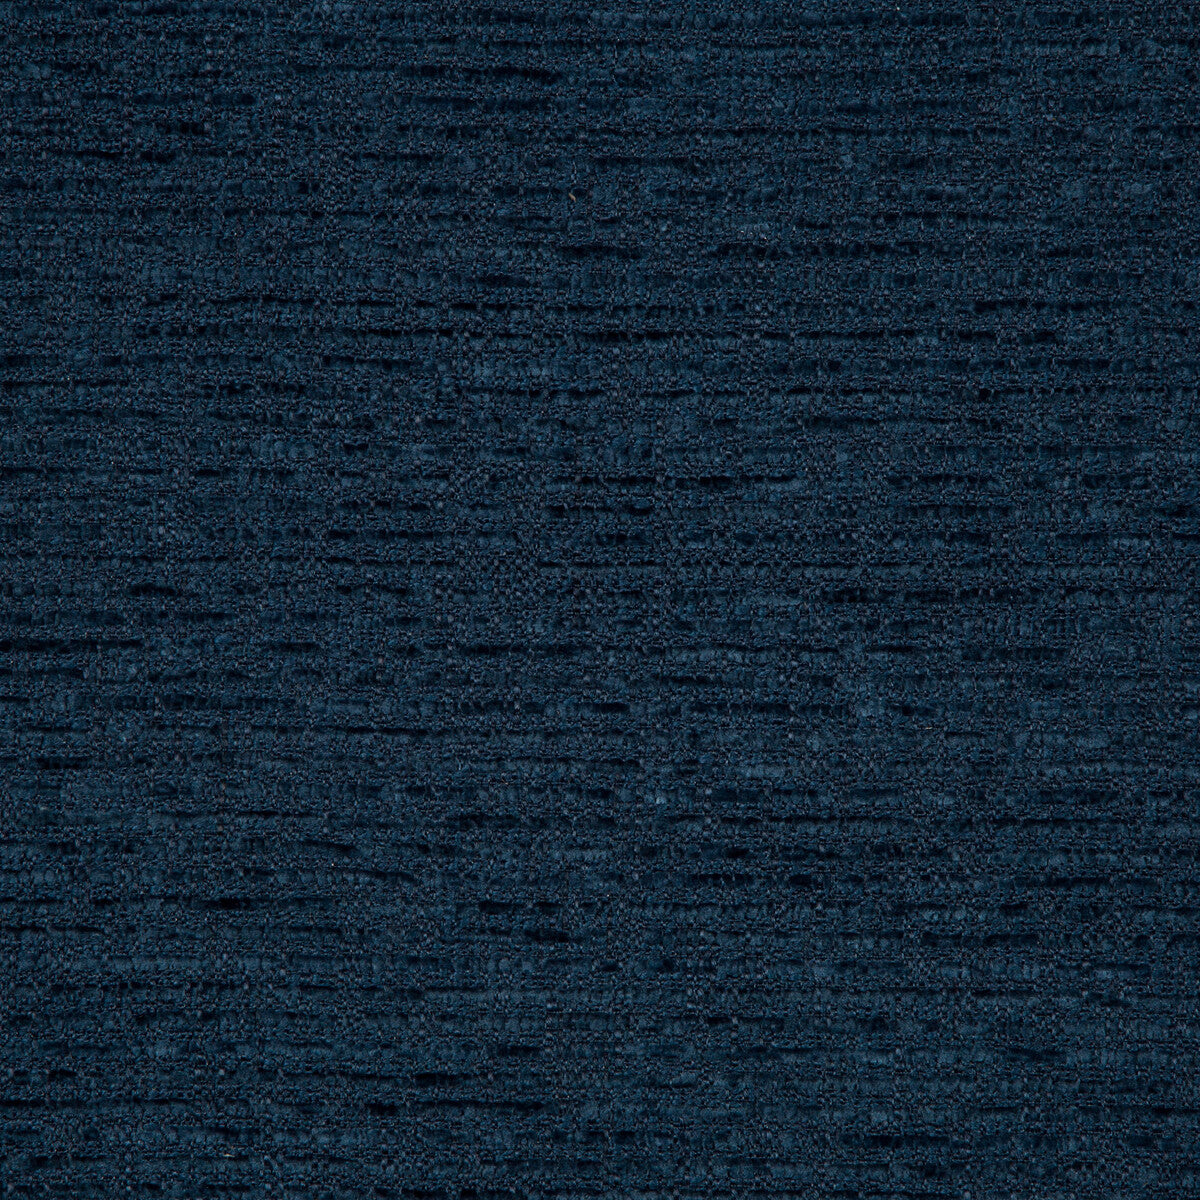 Kravet Smart fabric in 35940-50 color - pattern 35940.50.0 - by Kravet Smart in the Performance Kravetarmor collection